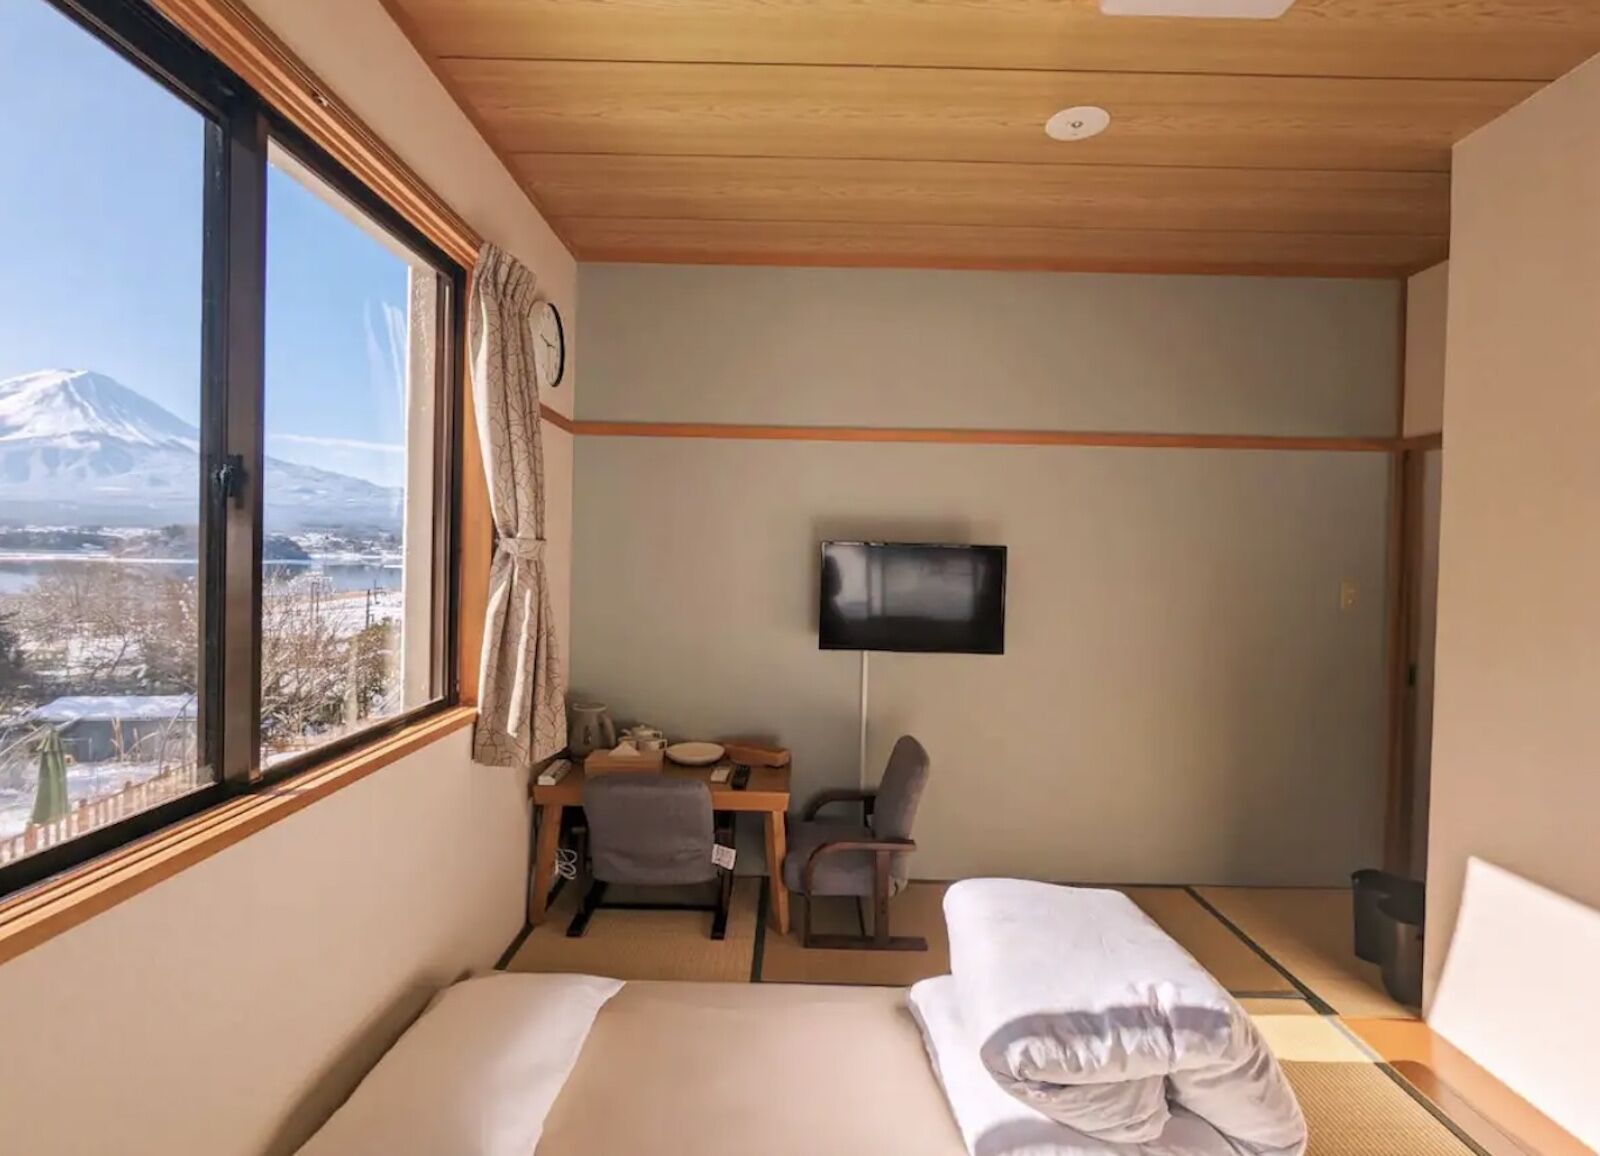 Japan Mount Fuji airbnb budget